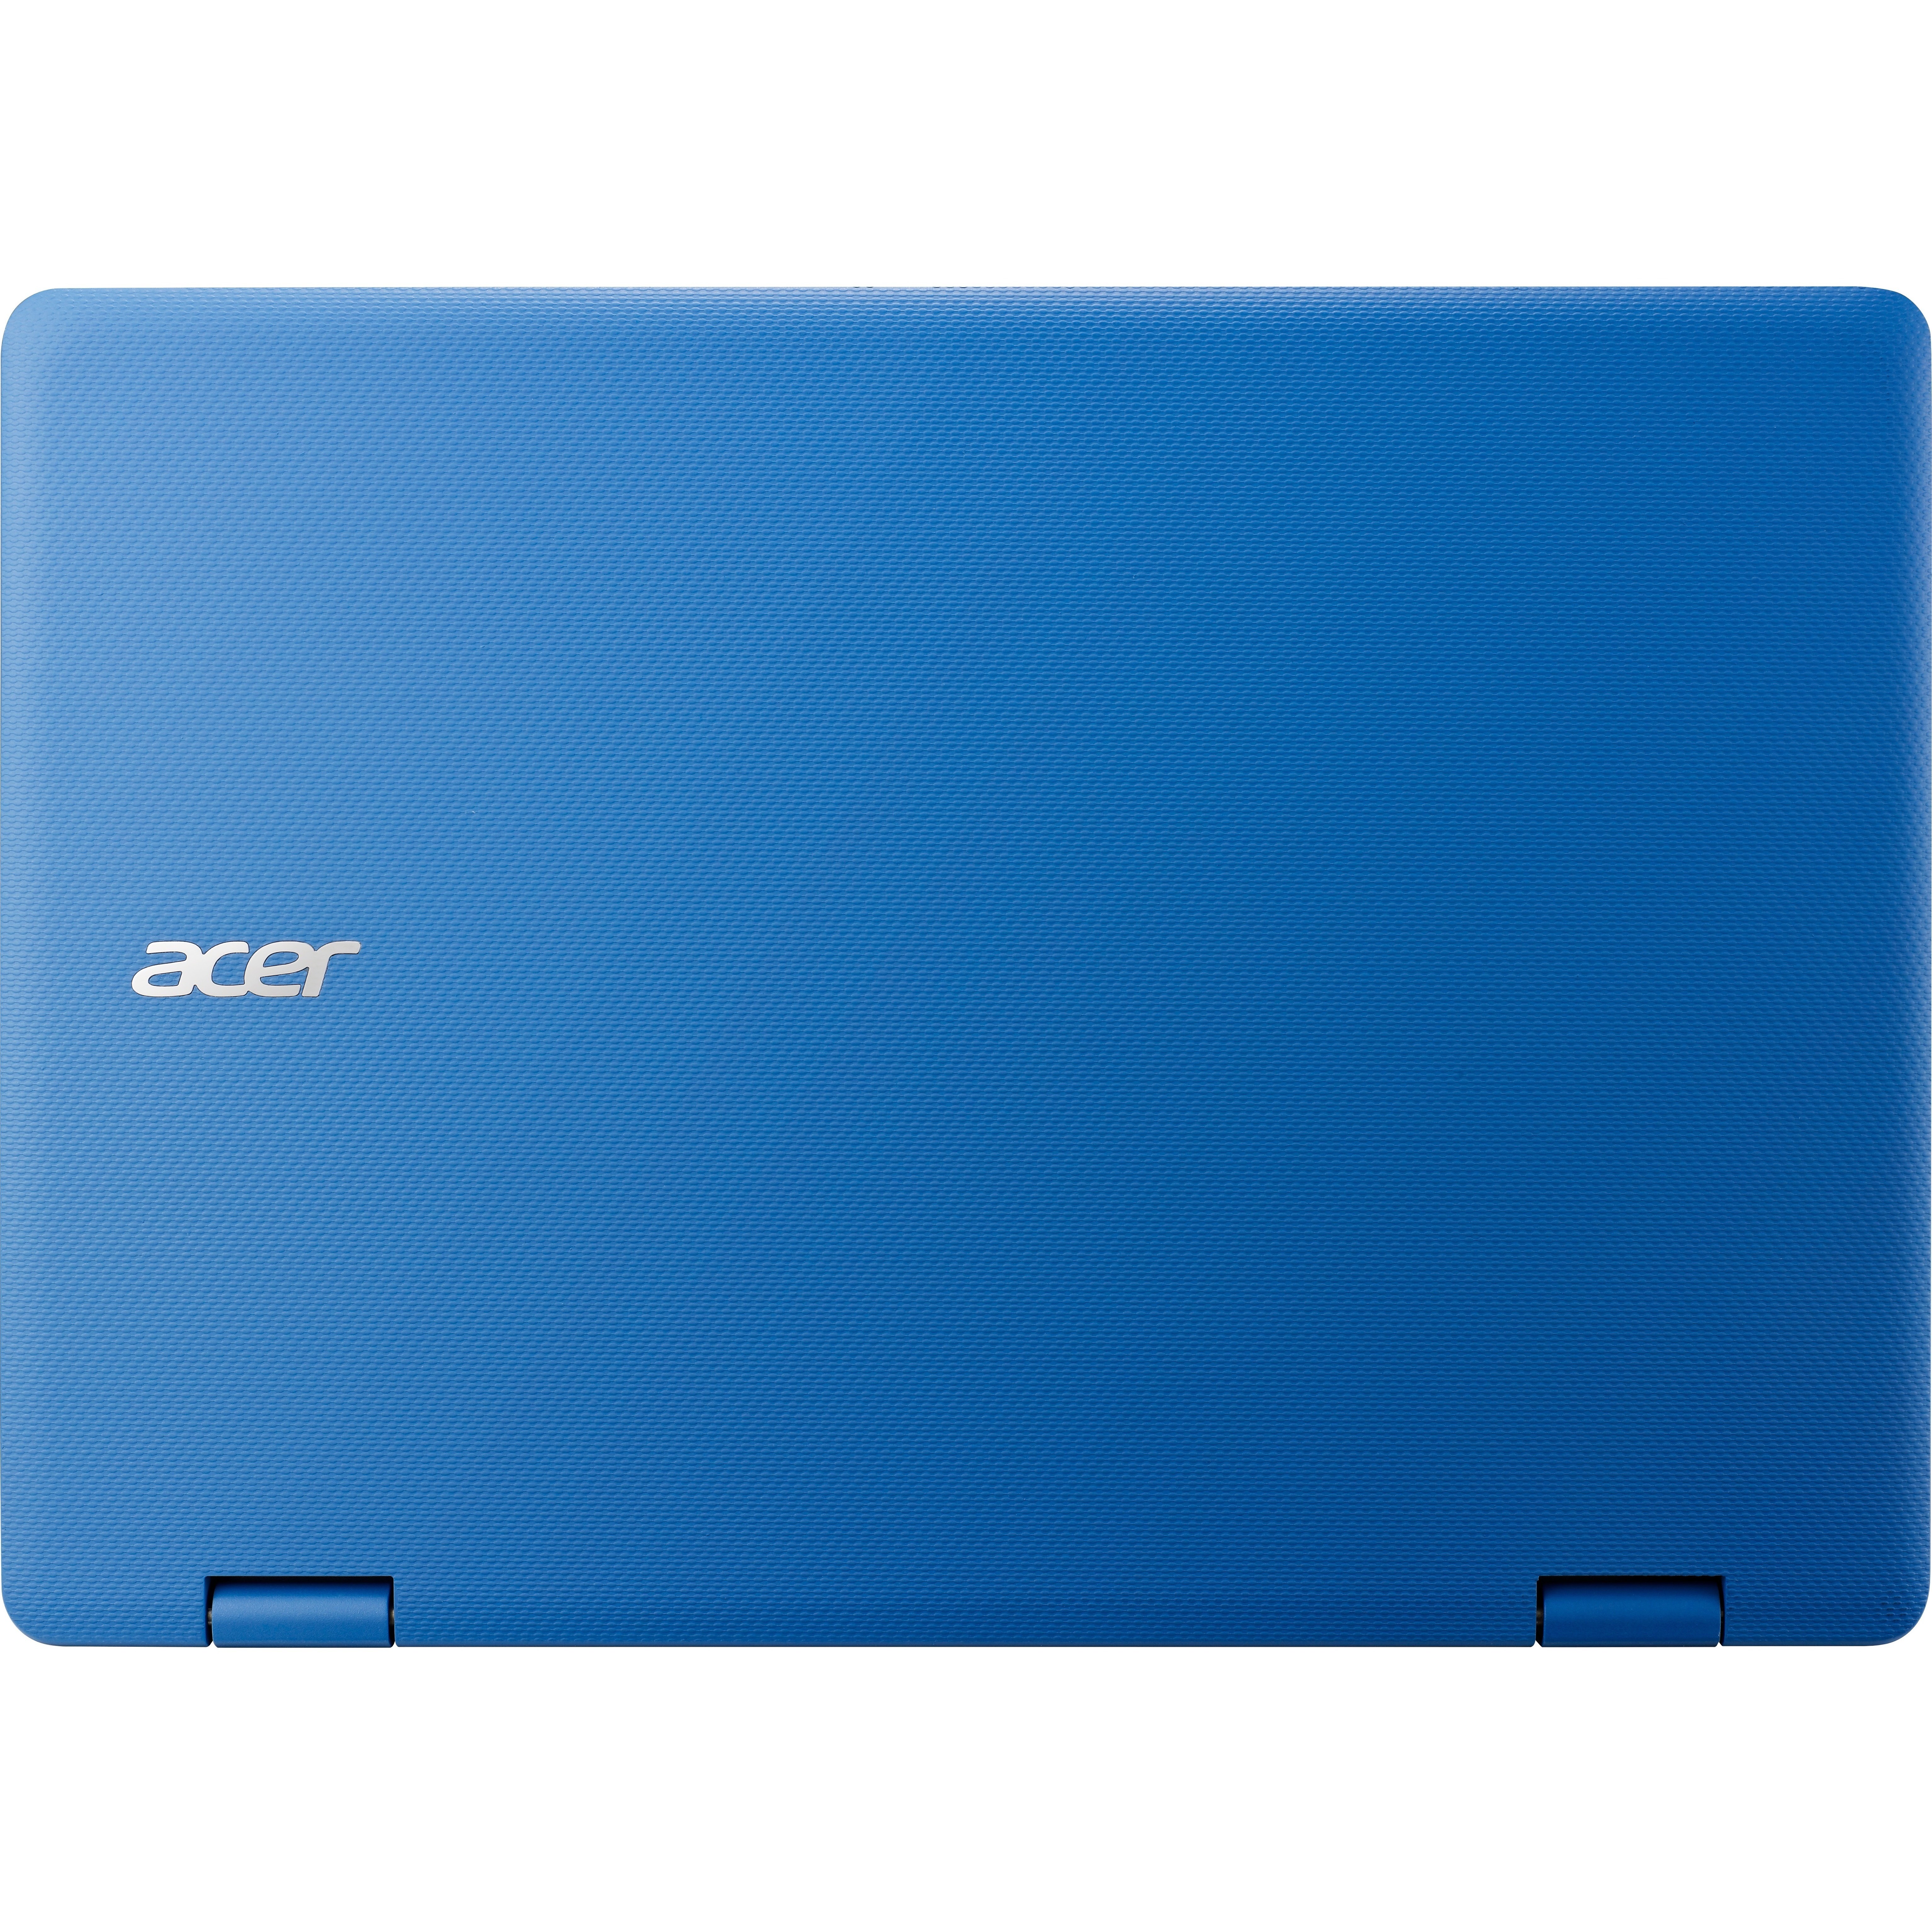 Acer Aspire R 11 R3-131T-C3GG - 11.6" - Celeron N3150 - 4 GB RAM - 500 GB HDD - US International - image 5 of 6